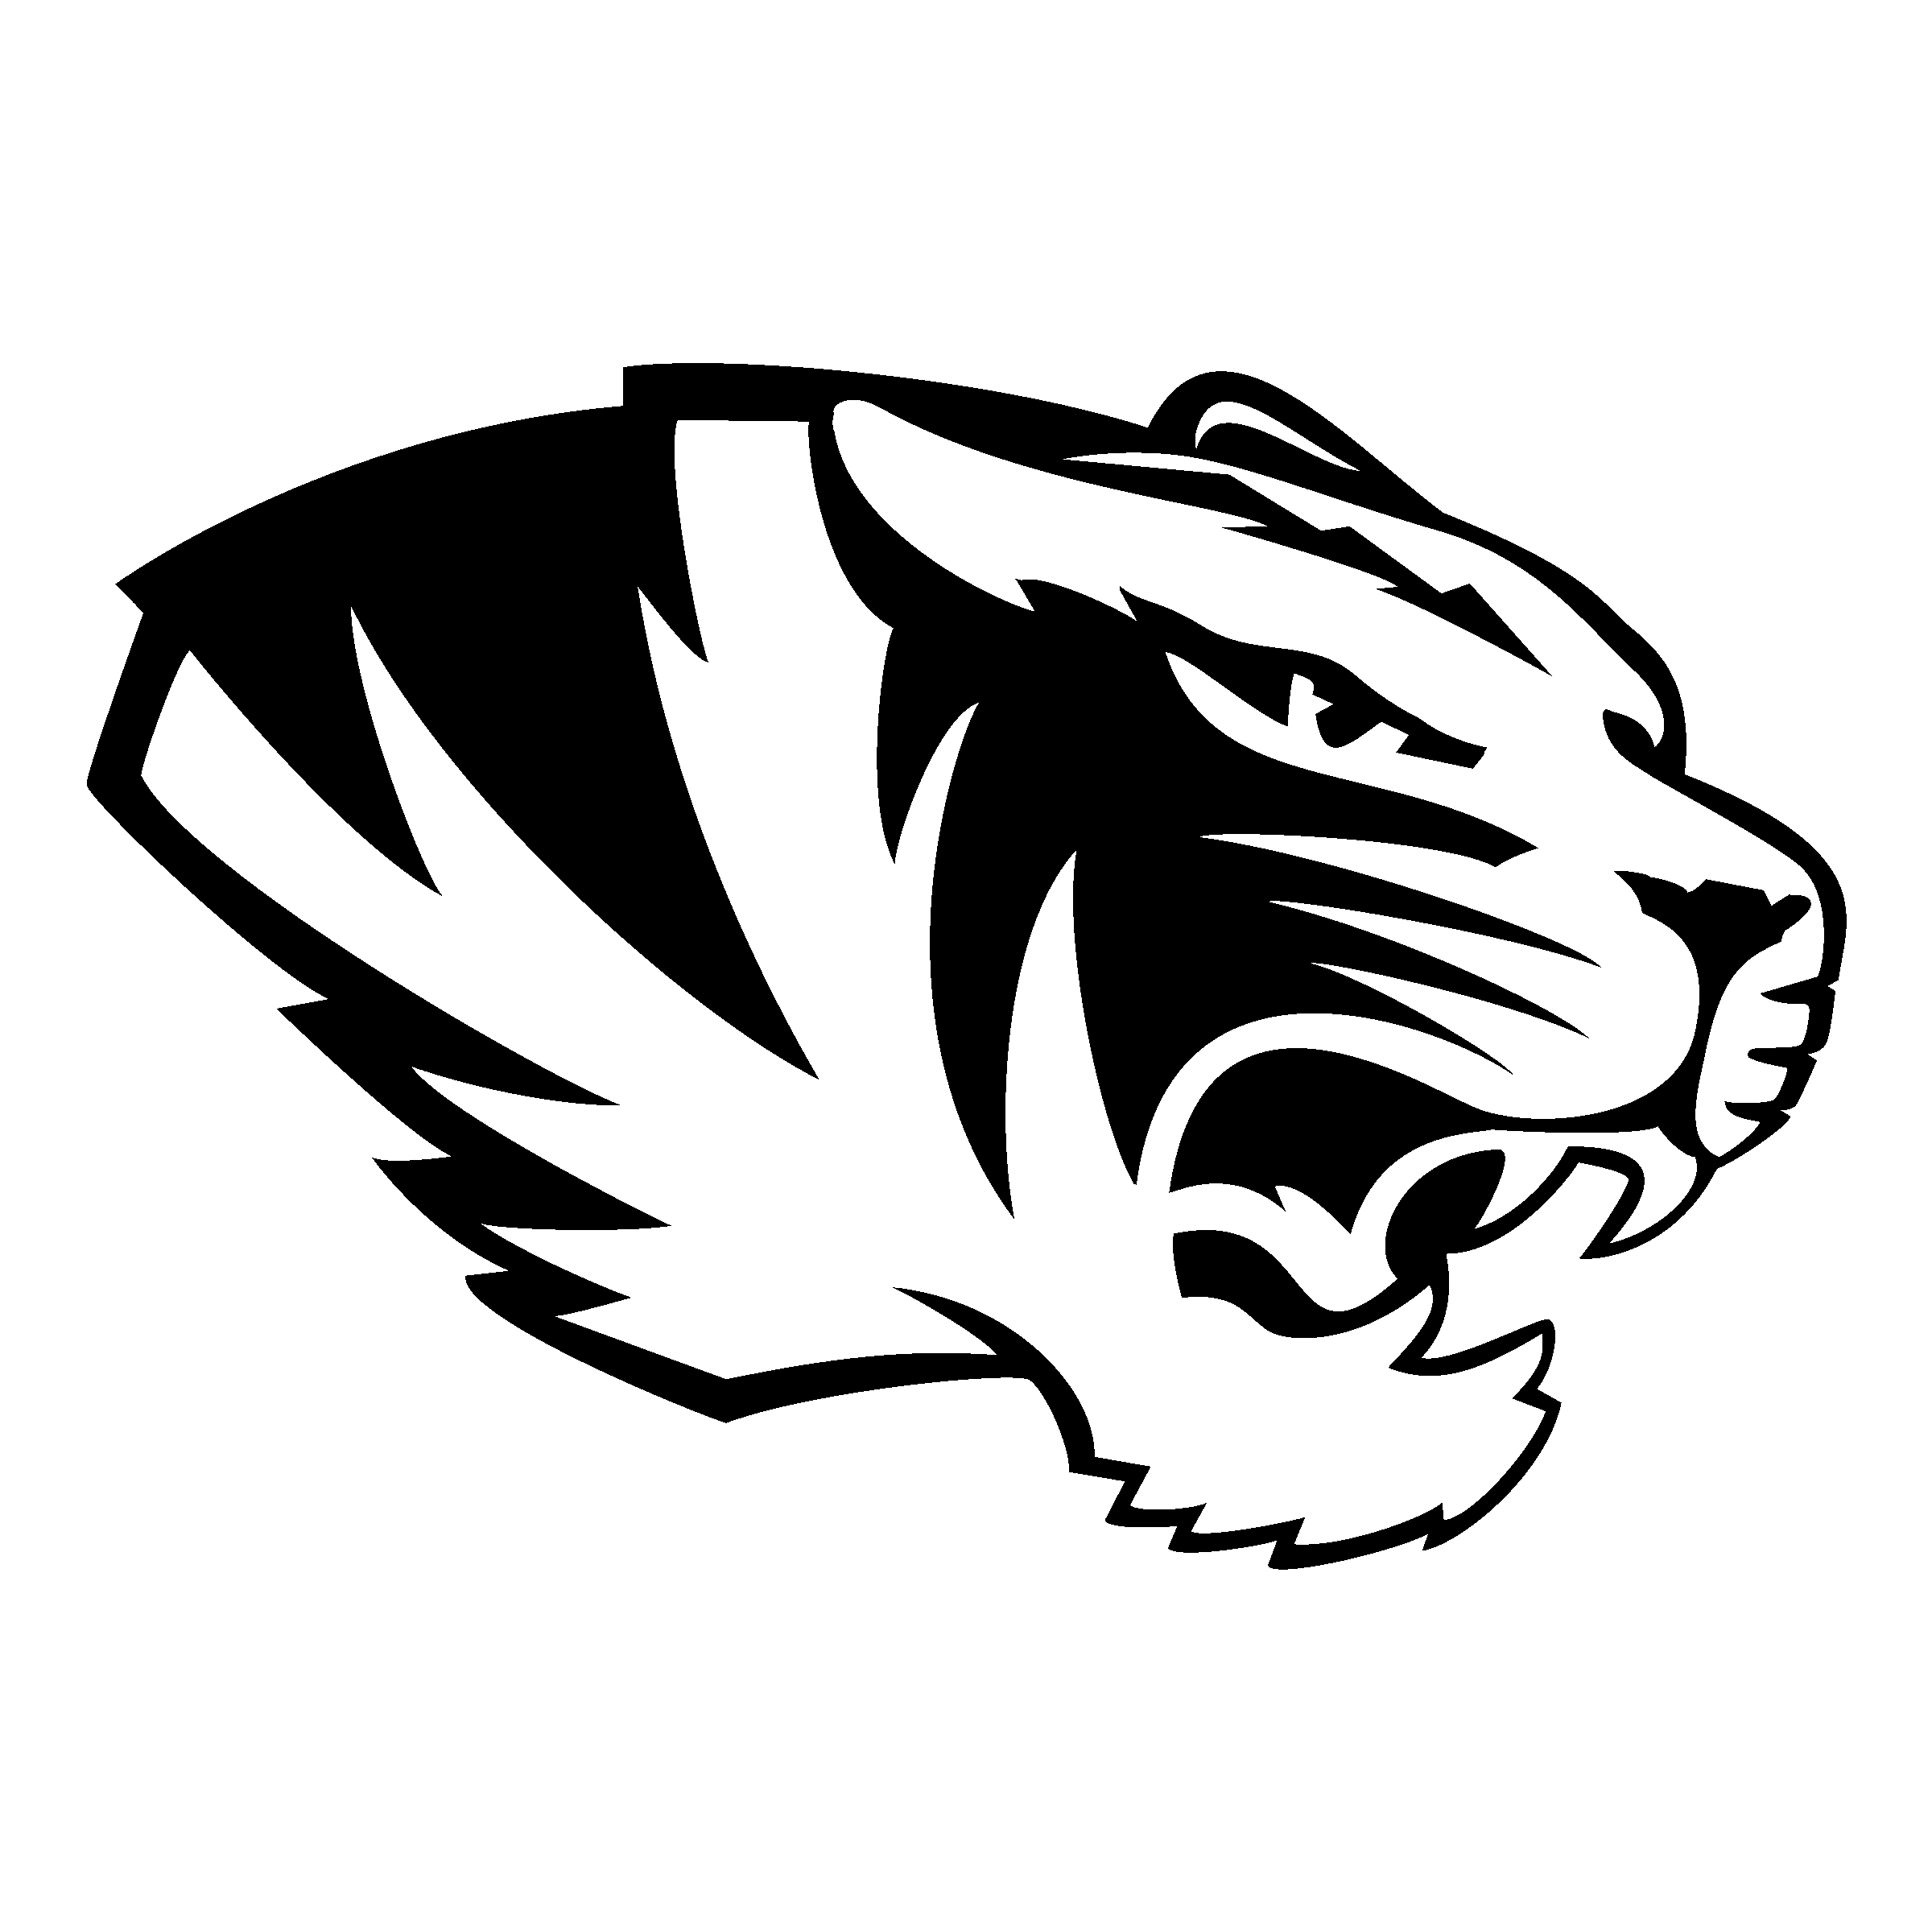 Missouri Tigers Logo PNG Transparent & SVG Vector Supply. Missouri tigers logo, Tiger logo, Missouri tigers